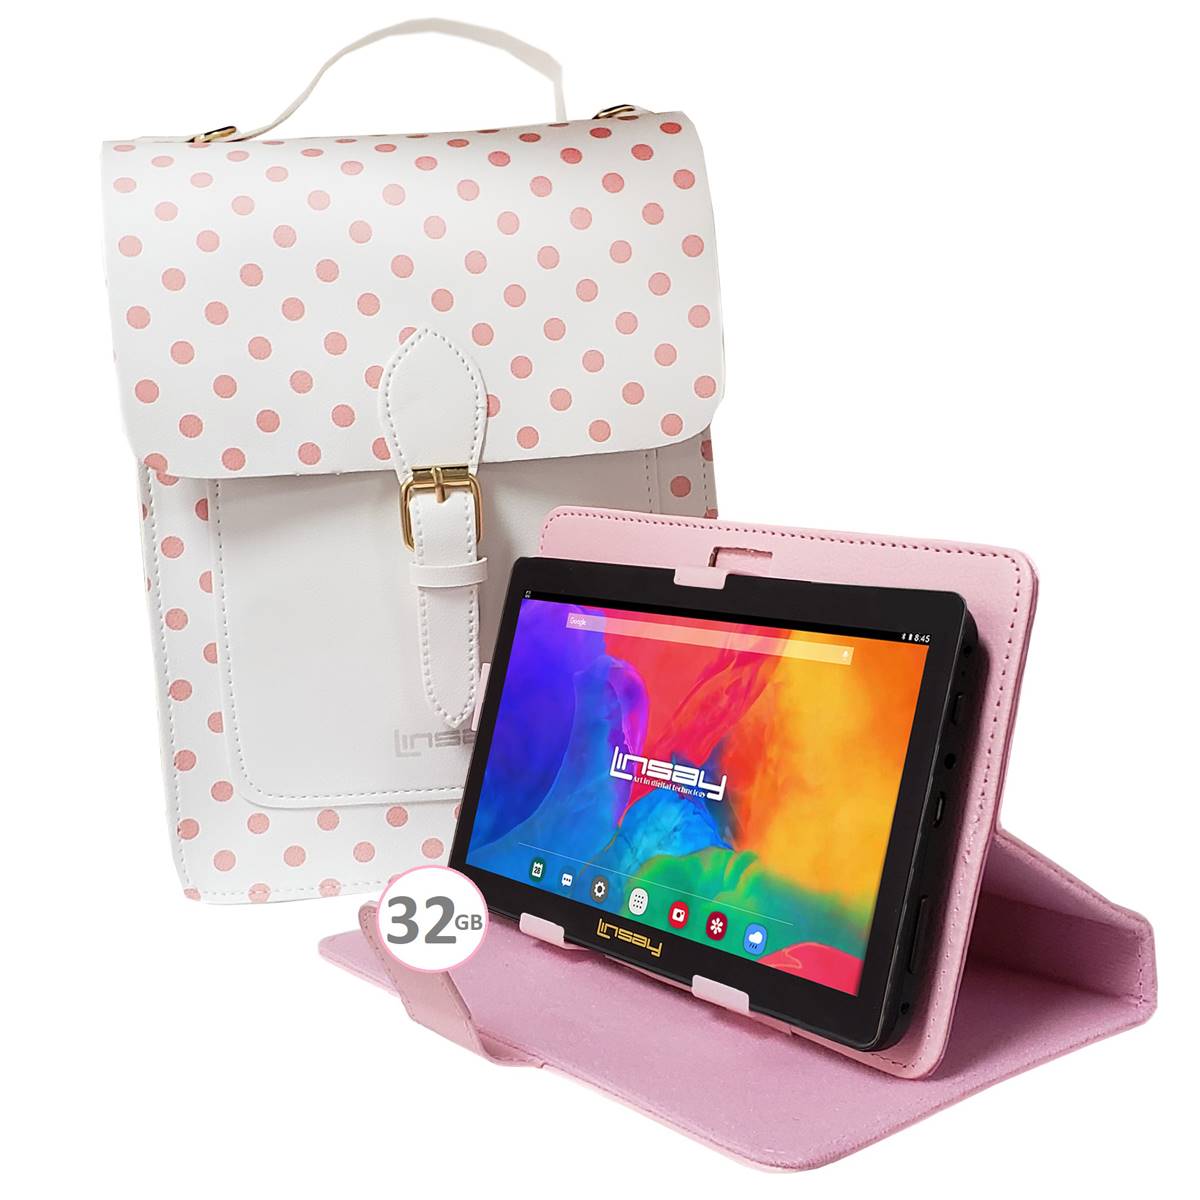 Linsay 7in. Quad Core Tablet With Polka Dot Fashion Handbag